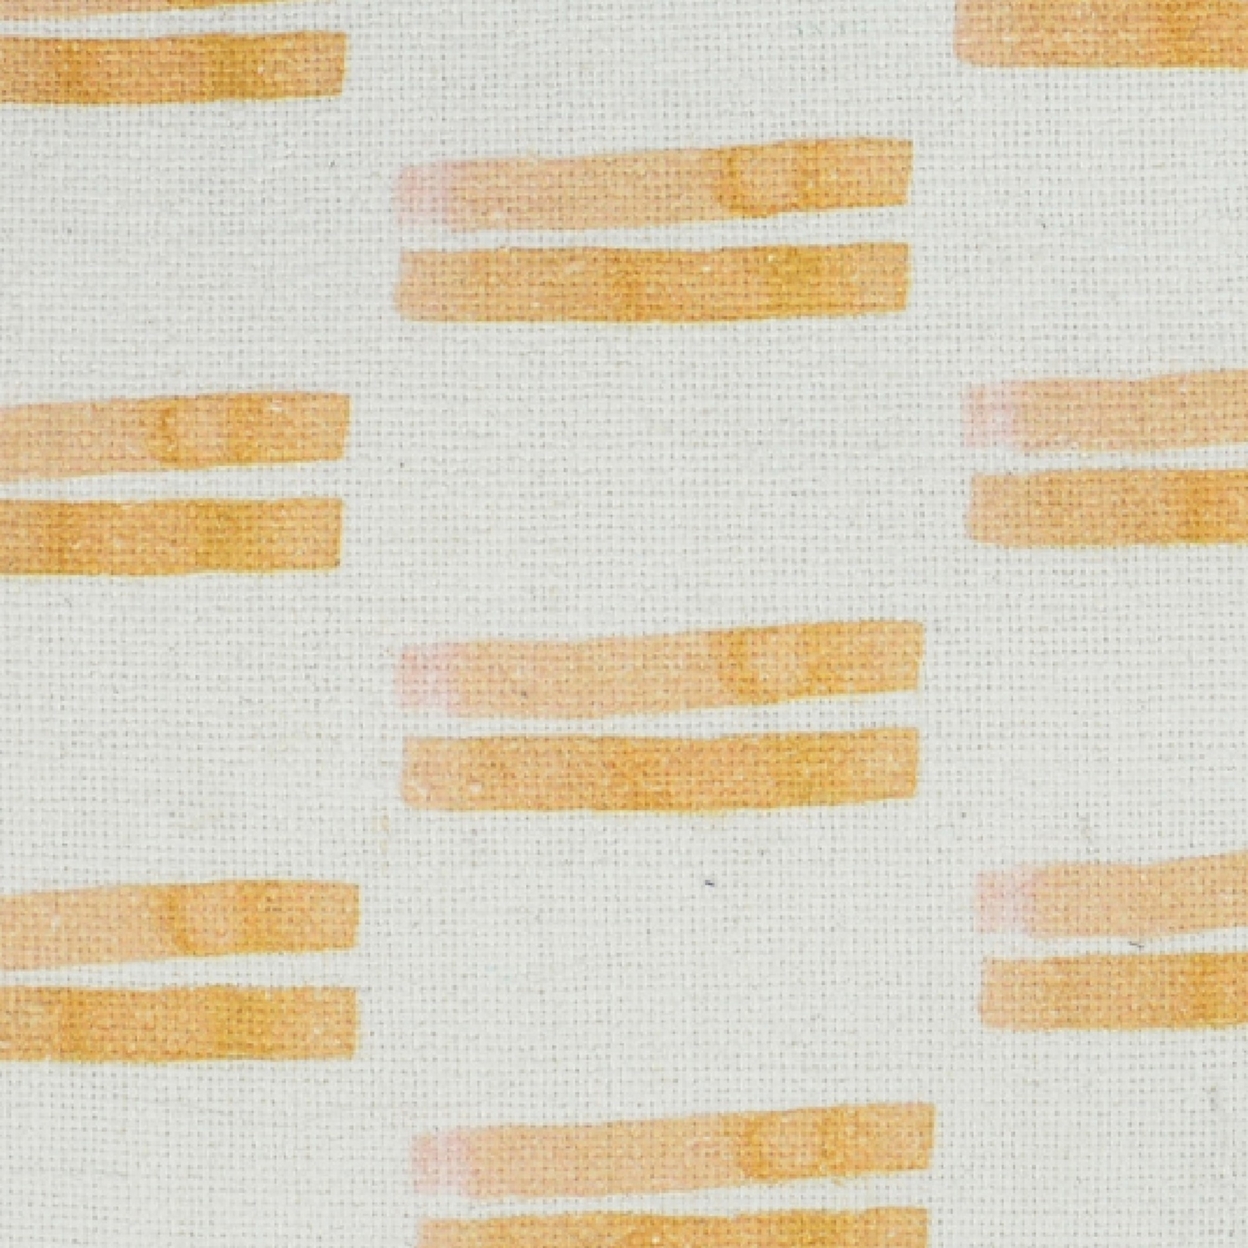 22 Inch Square Linen Accent Throw Pillow, Watercolor Design, Ivory, Orange- Saltoro Sherpi